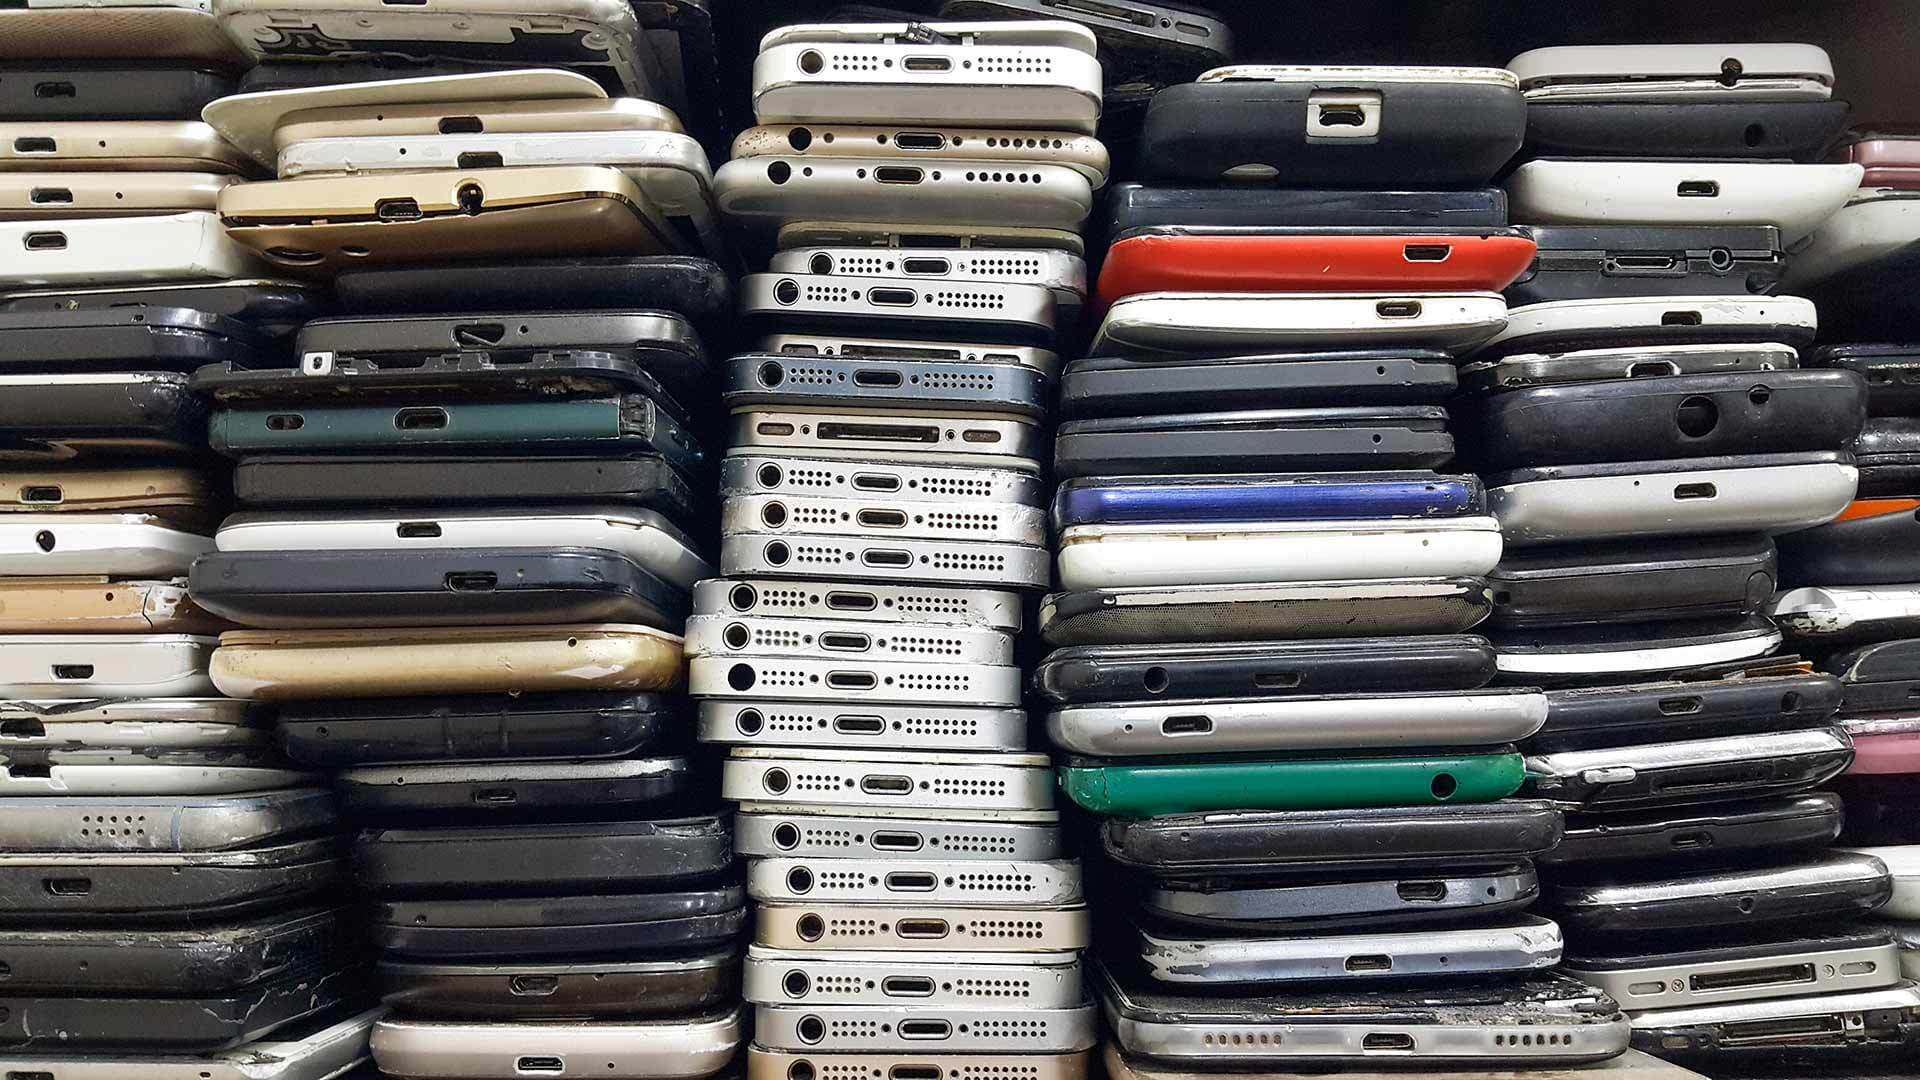 piles of old phones